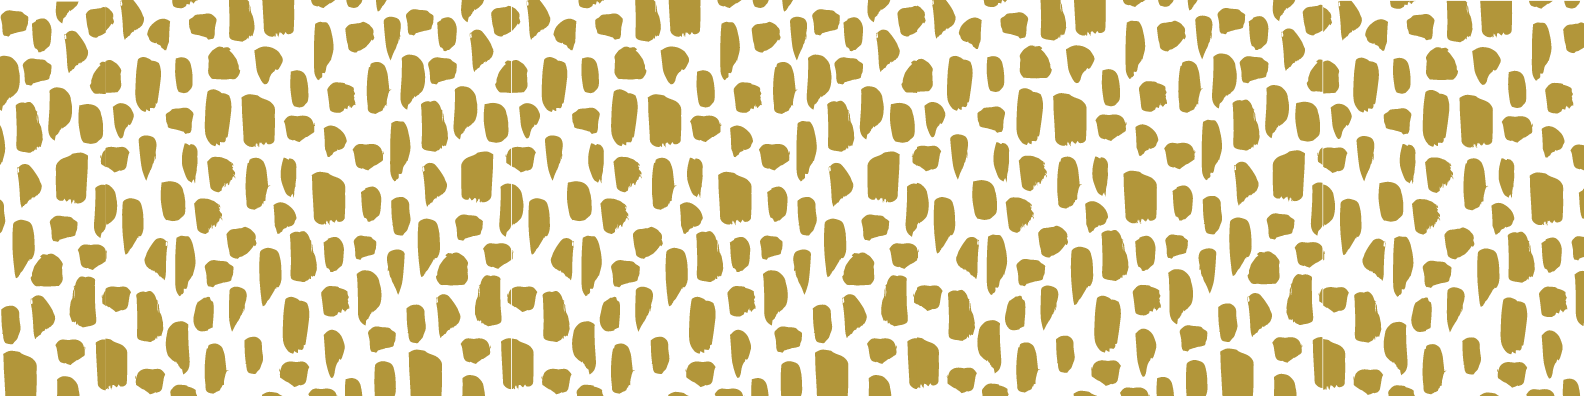 leopard print design